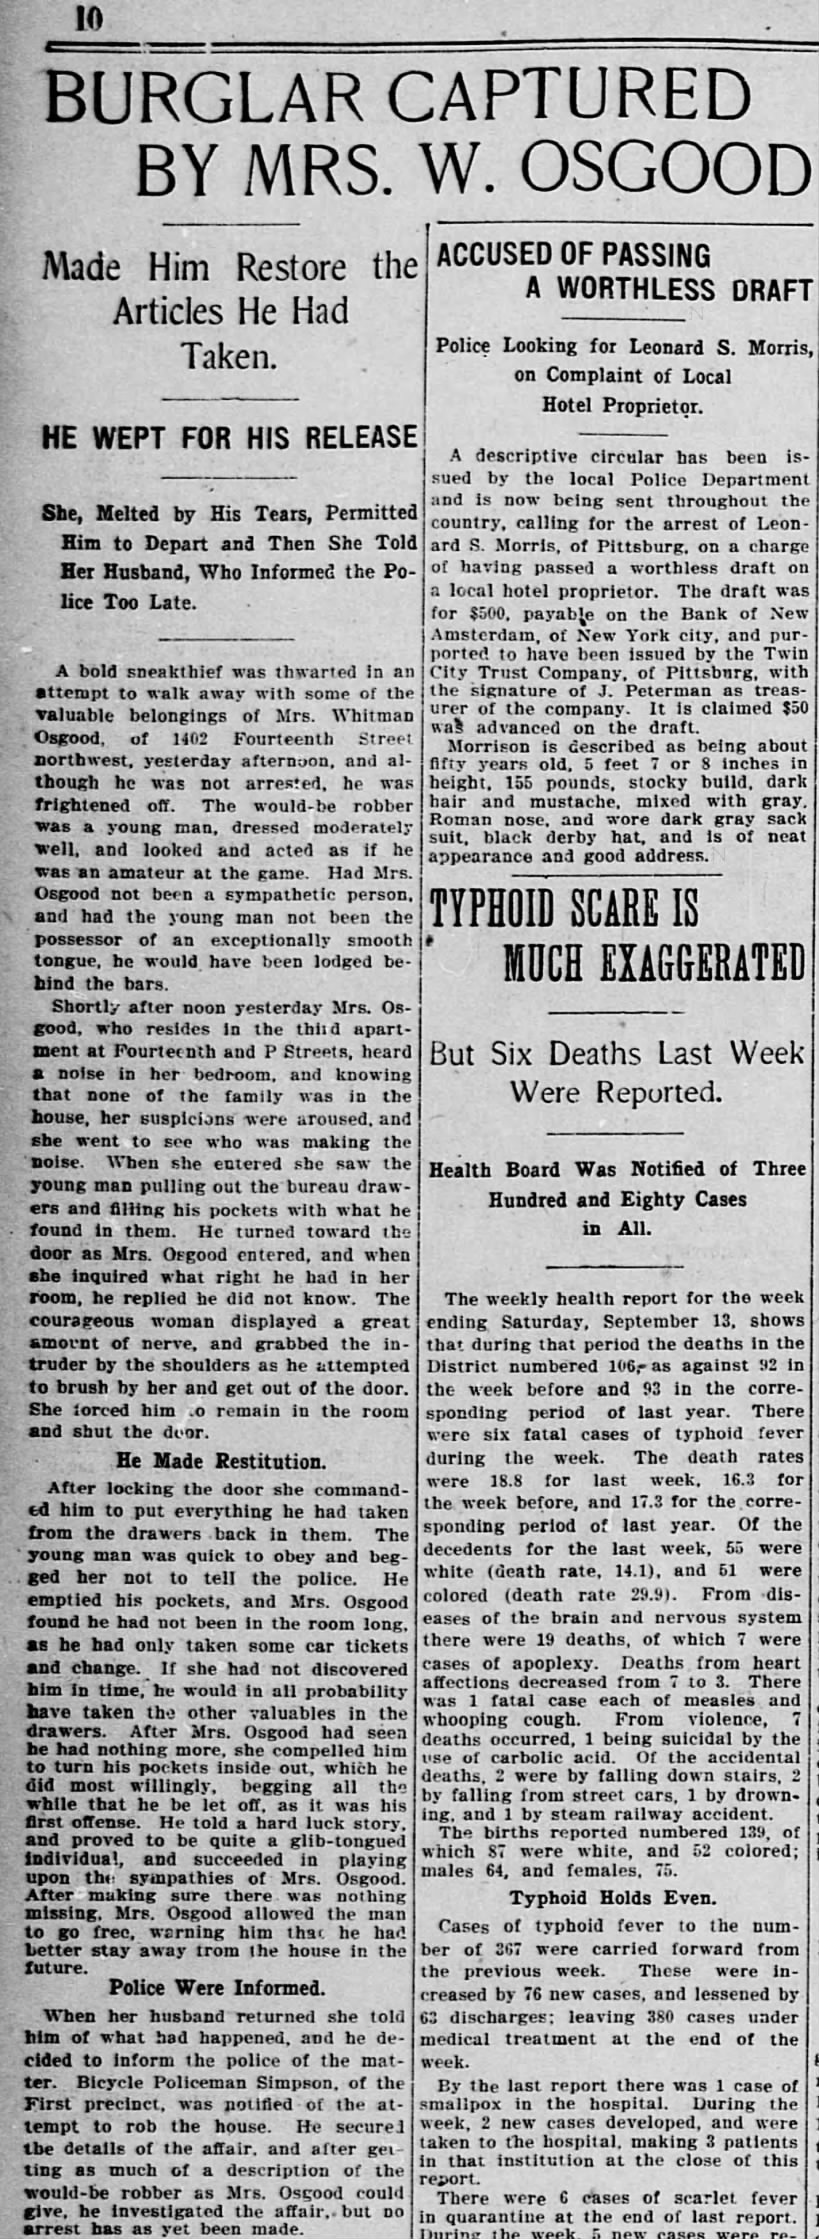 Mrs. CW Osgood thwarts burglary. 18 Sep 1902, p. 10, The Washington Times